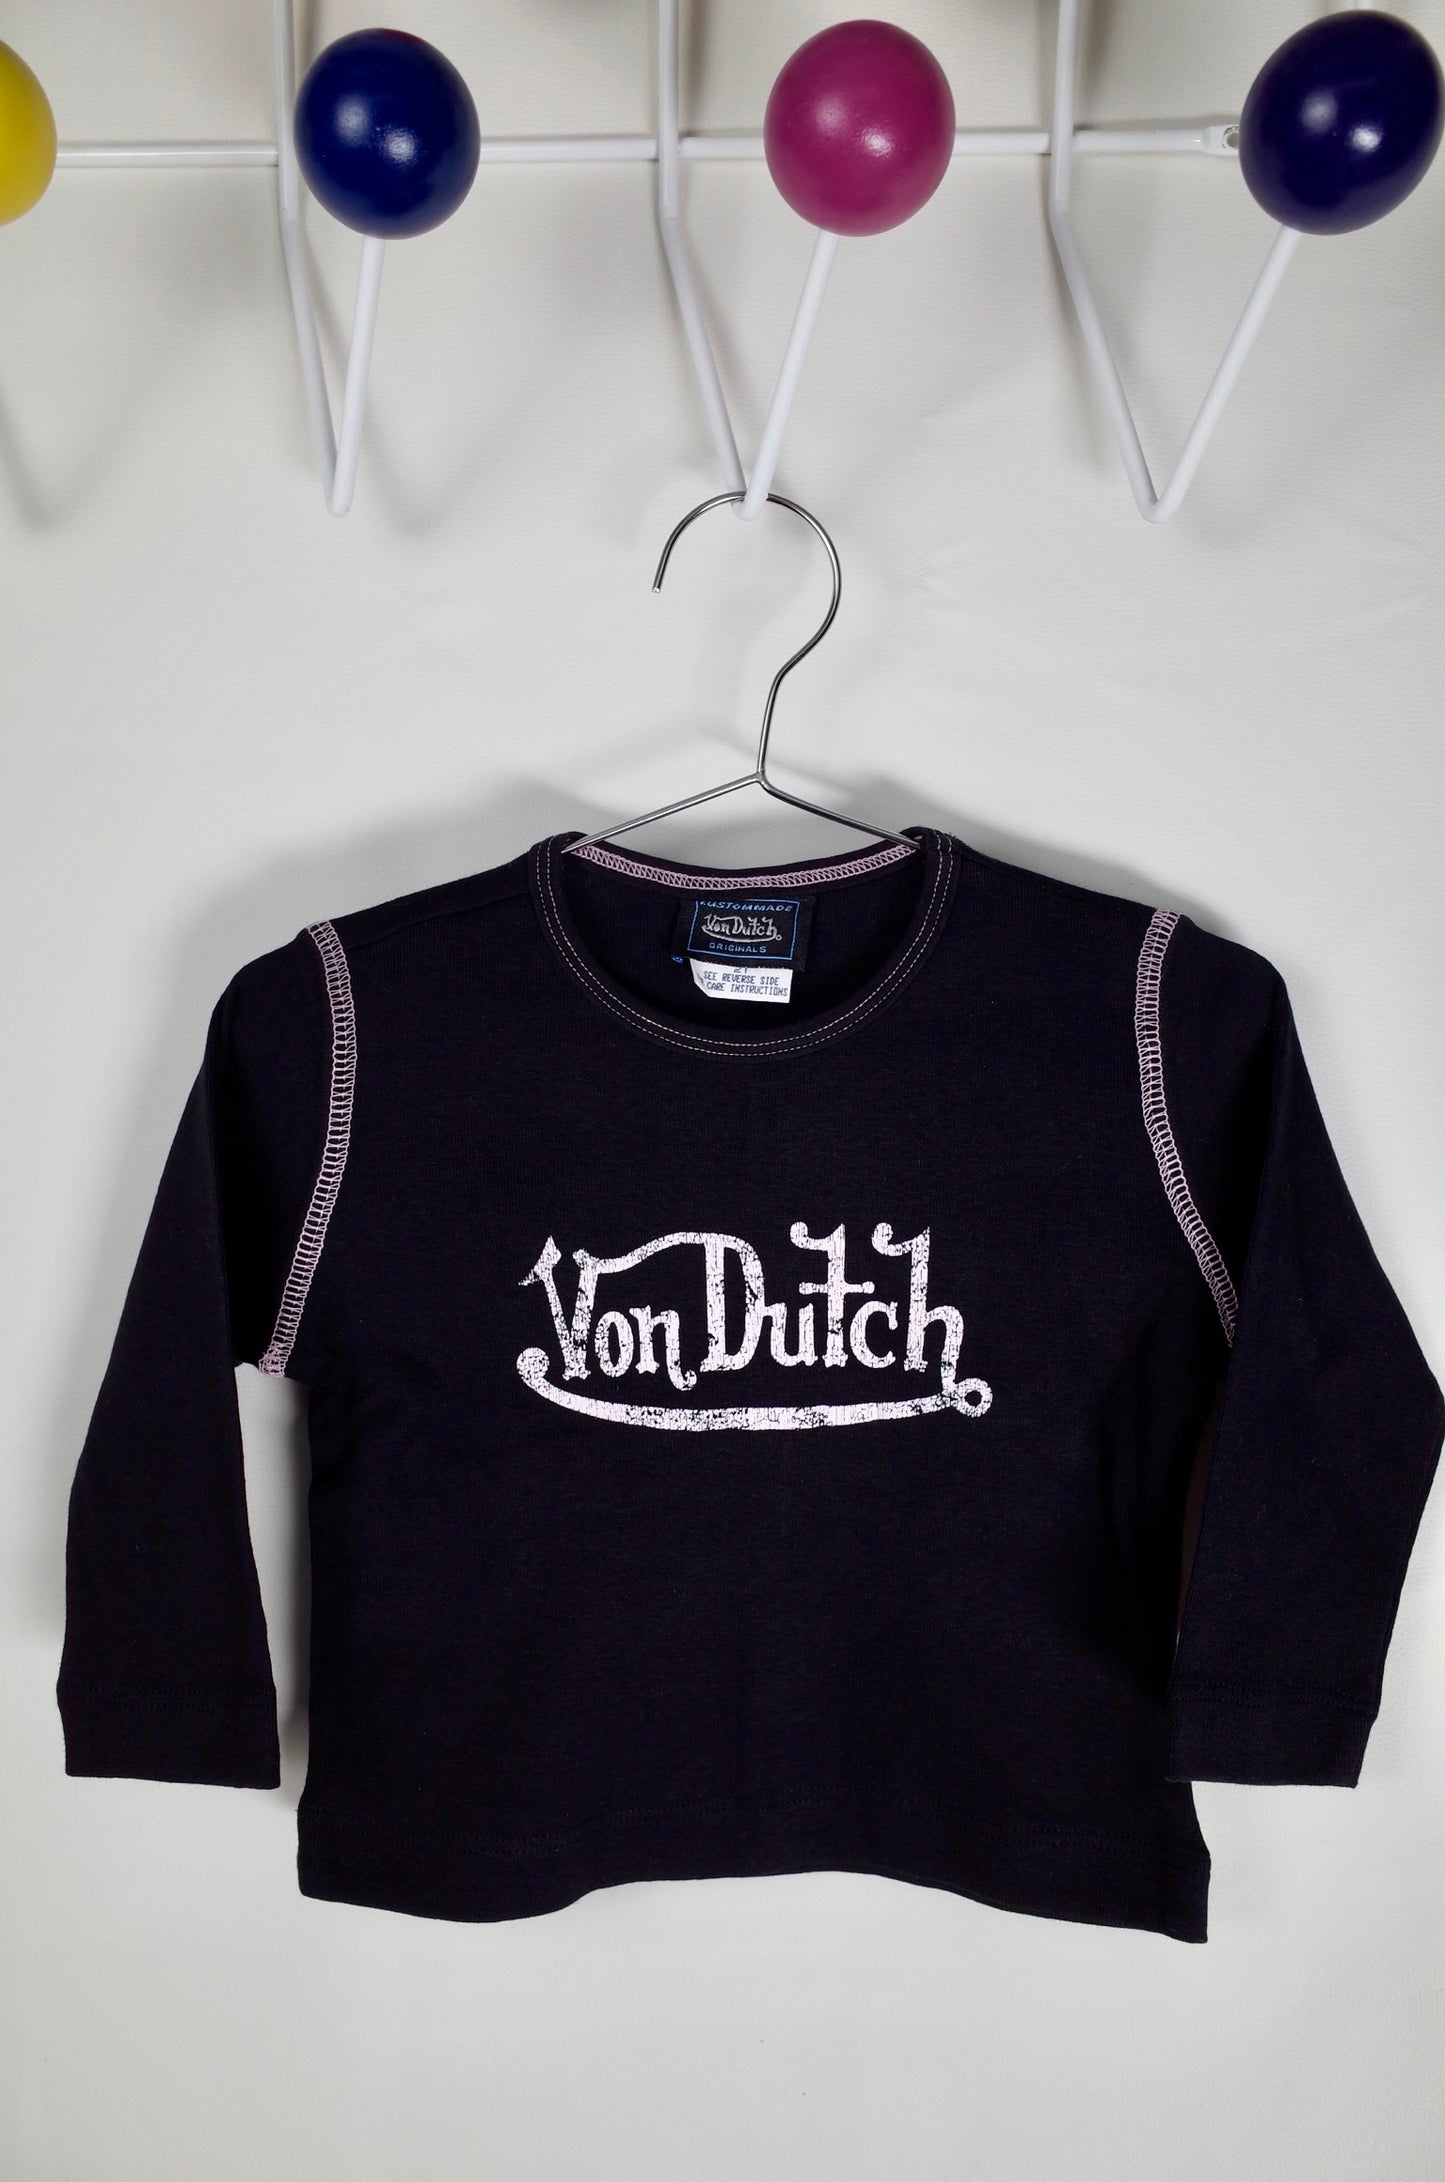 Von Dutch Toddler Long Sleeve T-Shirt